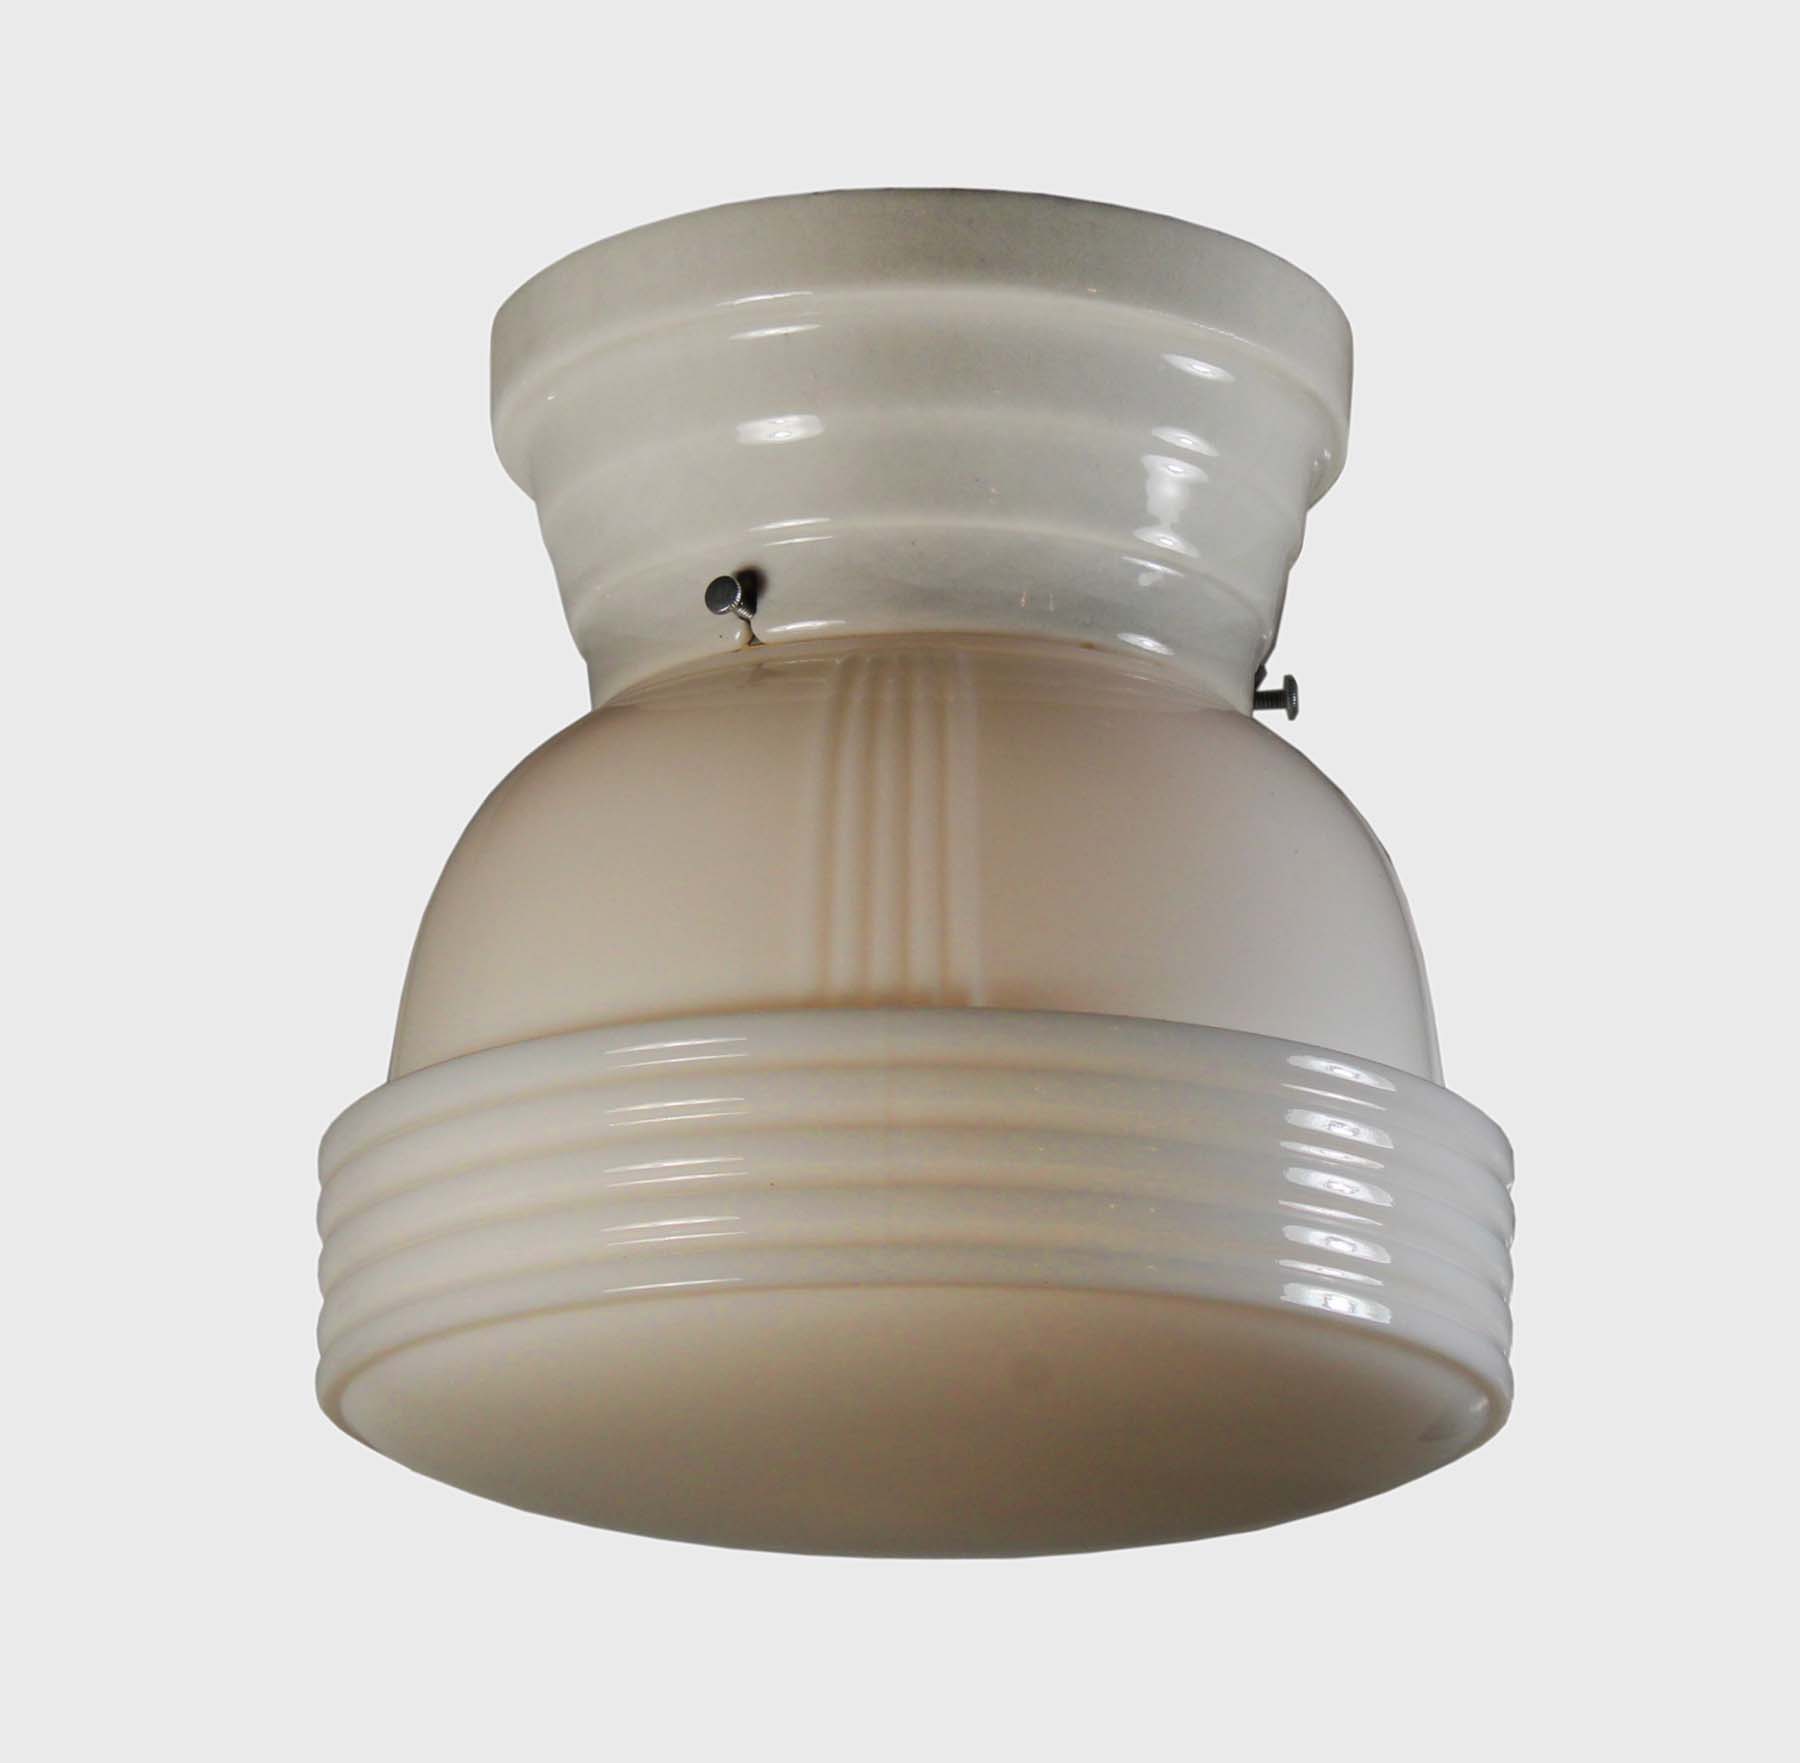 SOLD Antique Flush-Mount Schoolhouse Light with Porcelain Fitter-68854